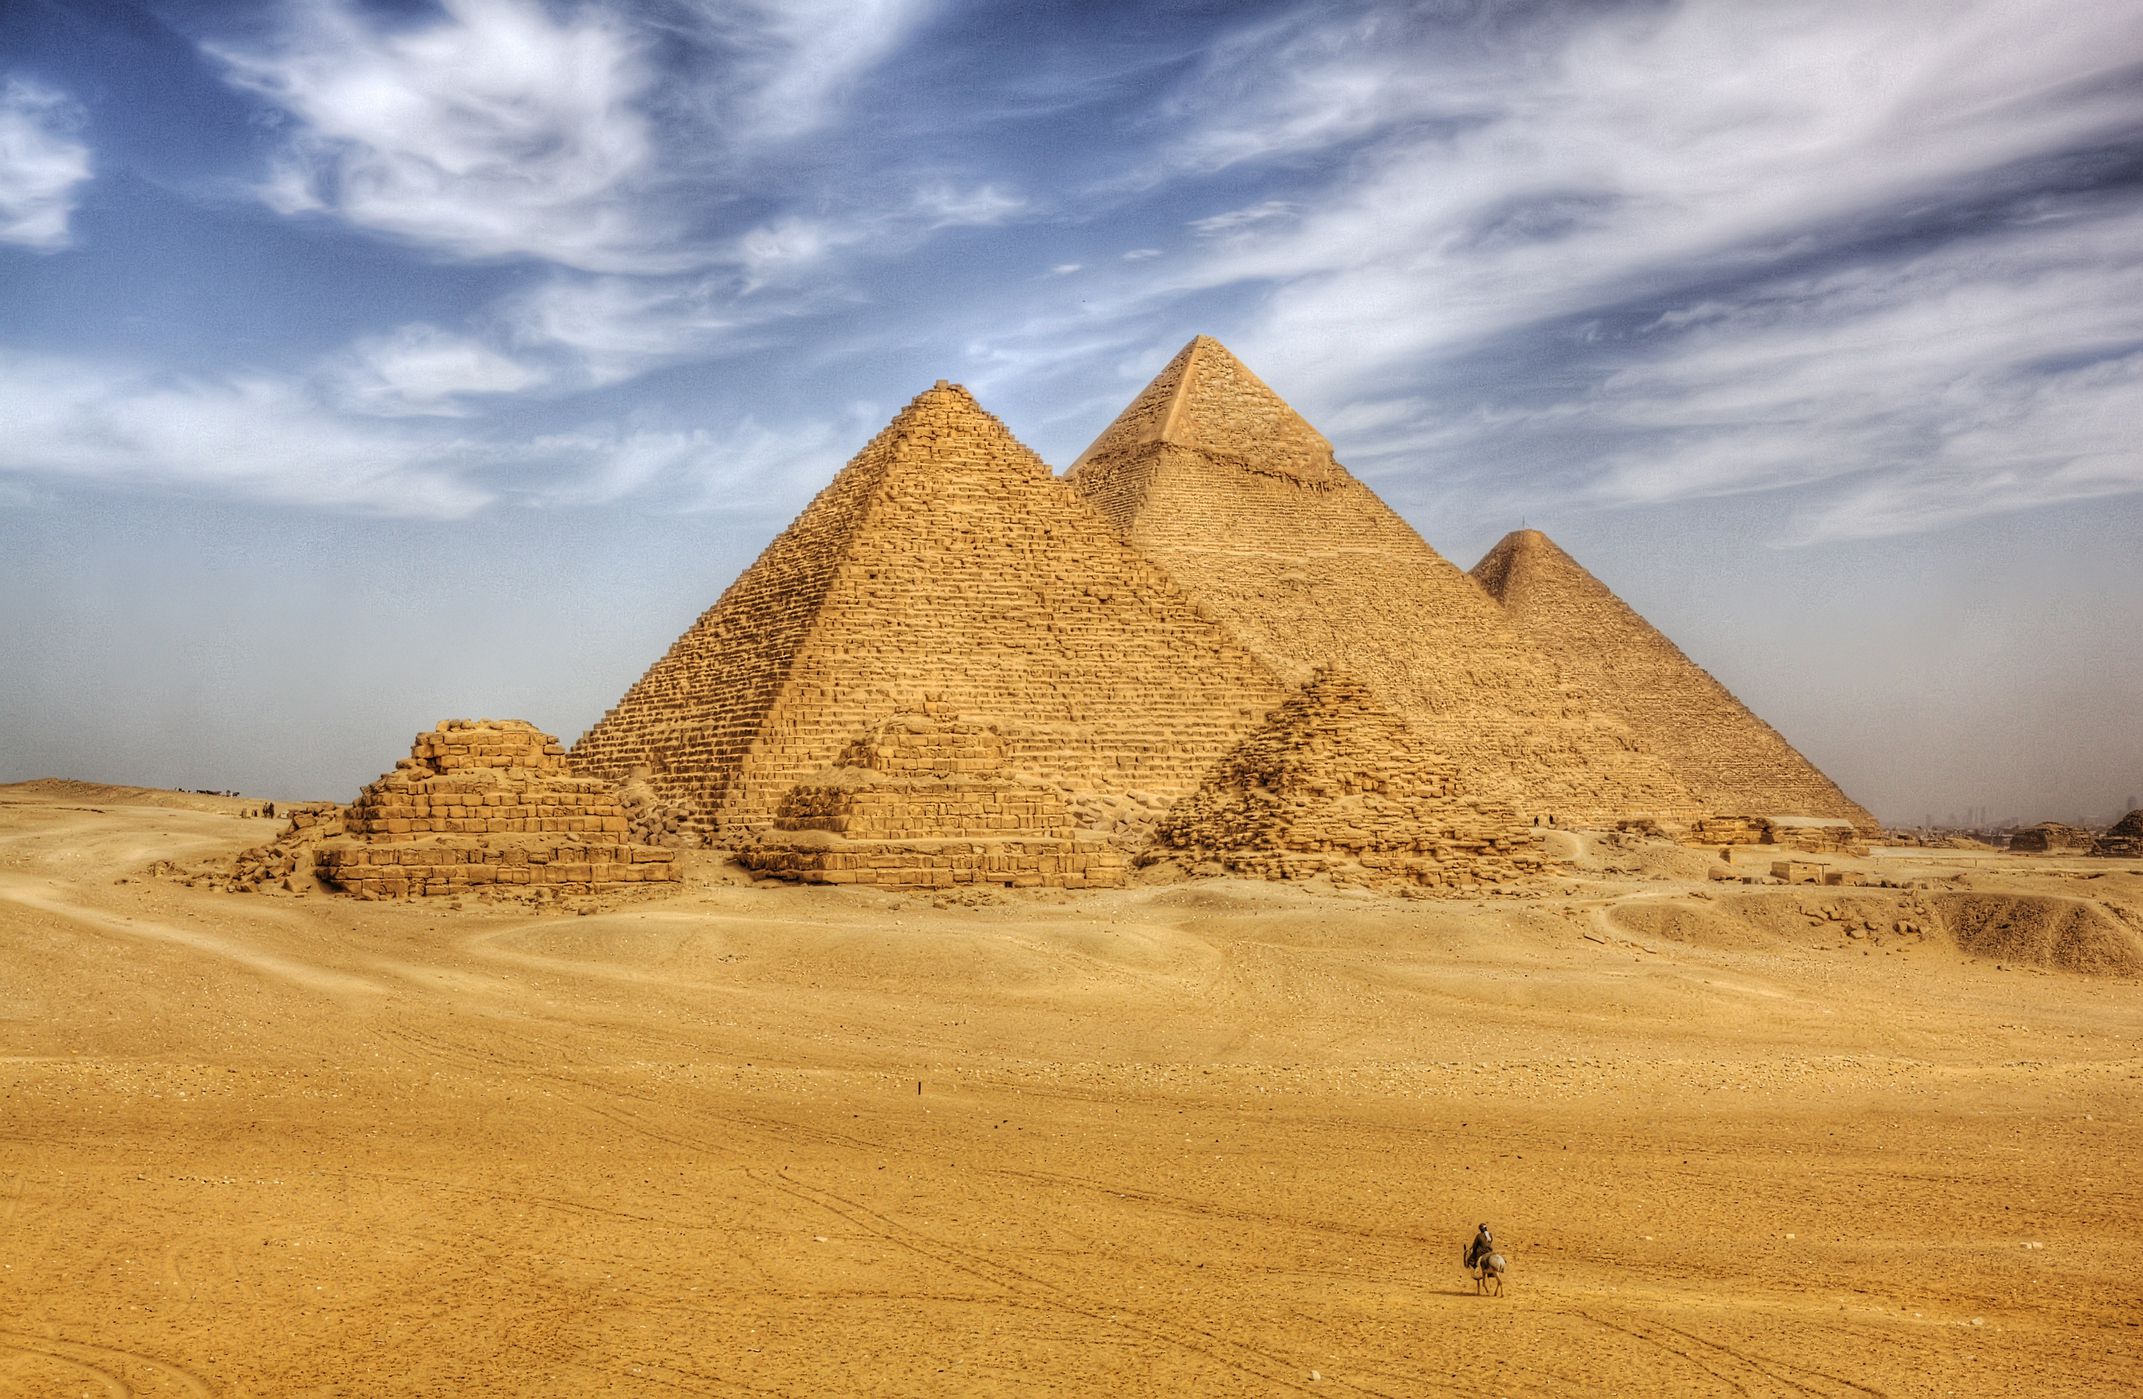 Aesthetics Exploration 2019: Pyramids of Giza – Aesthetics of Design